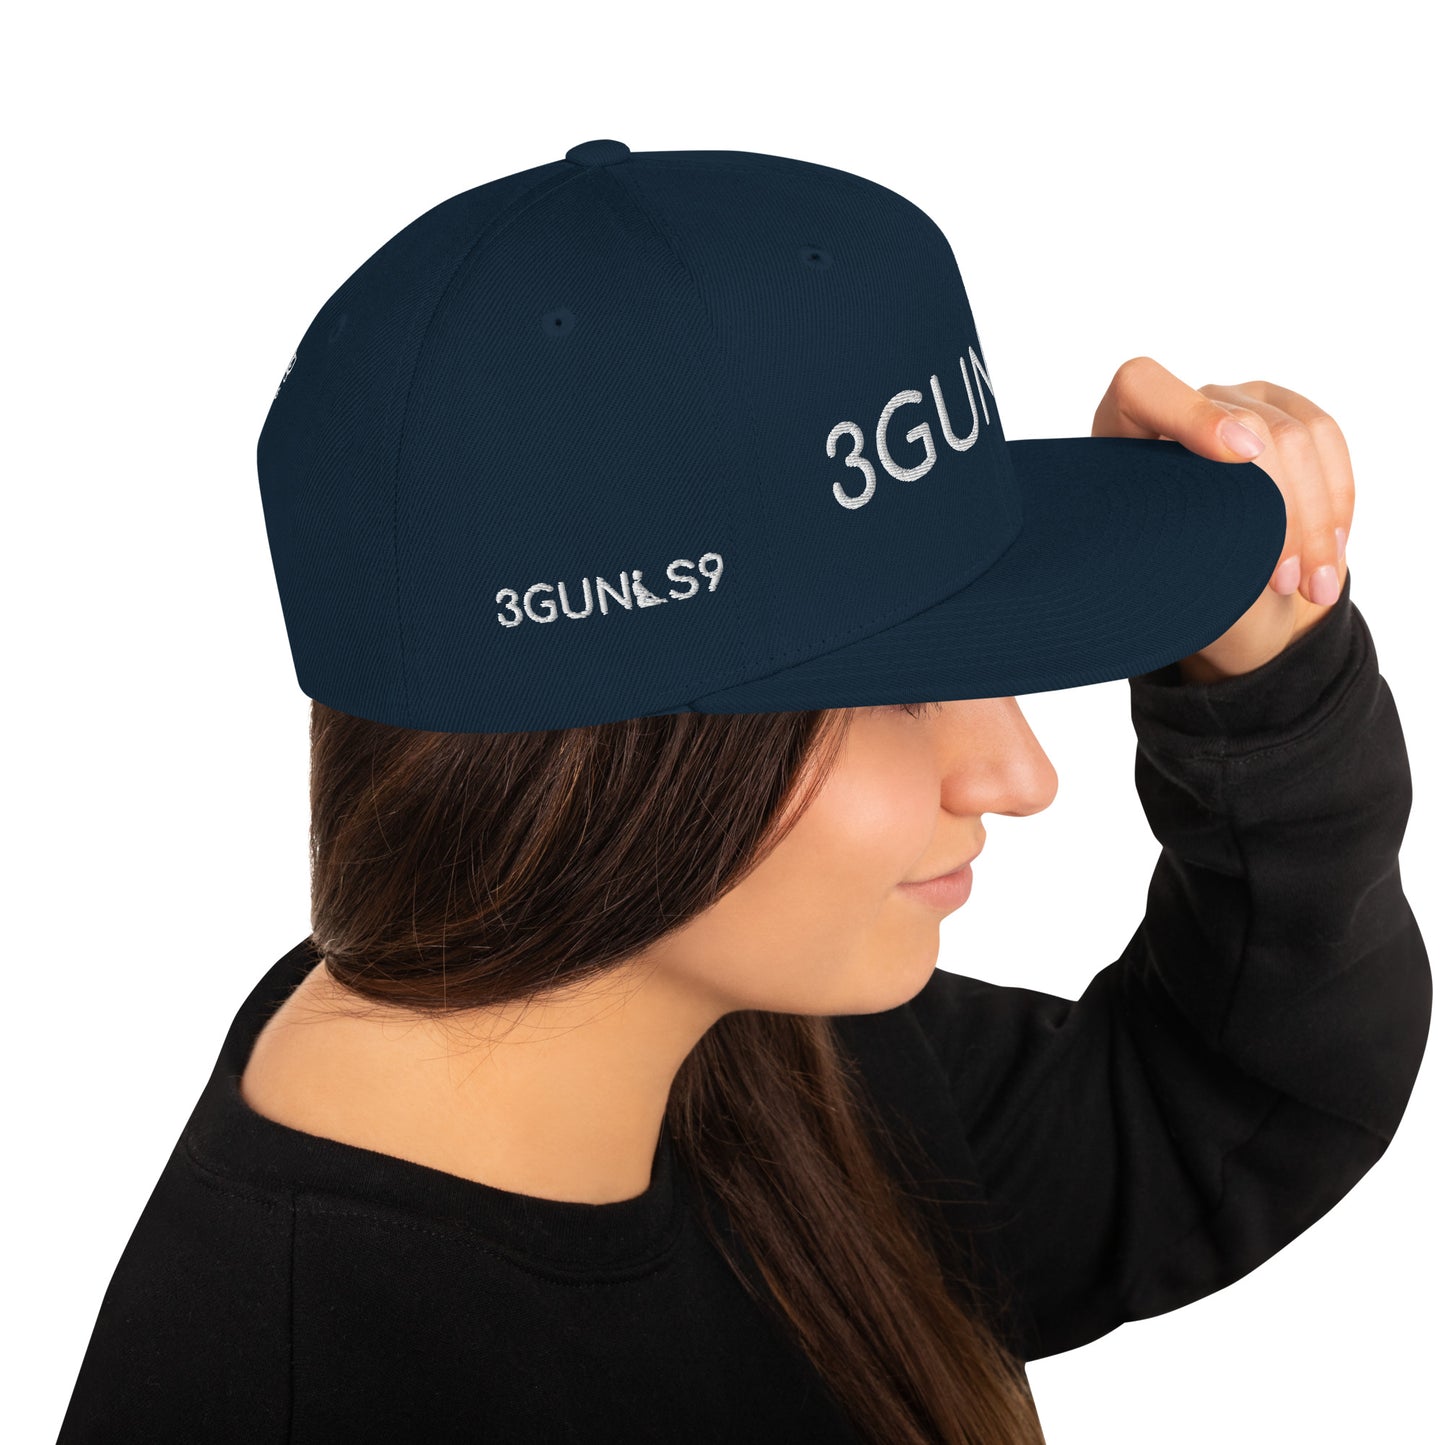 3Gunas9 Snapback Hat